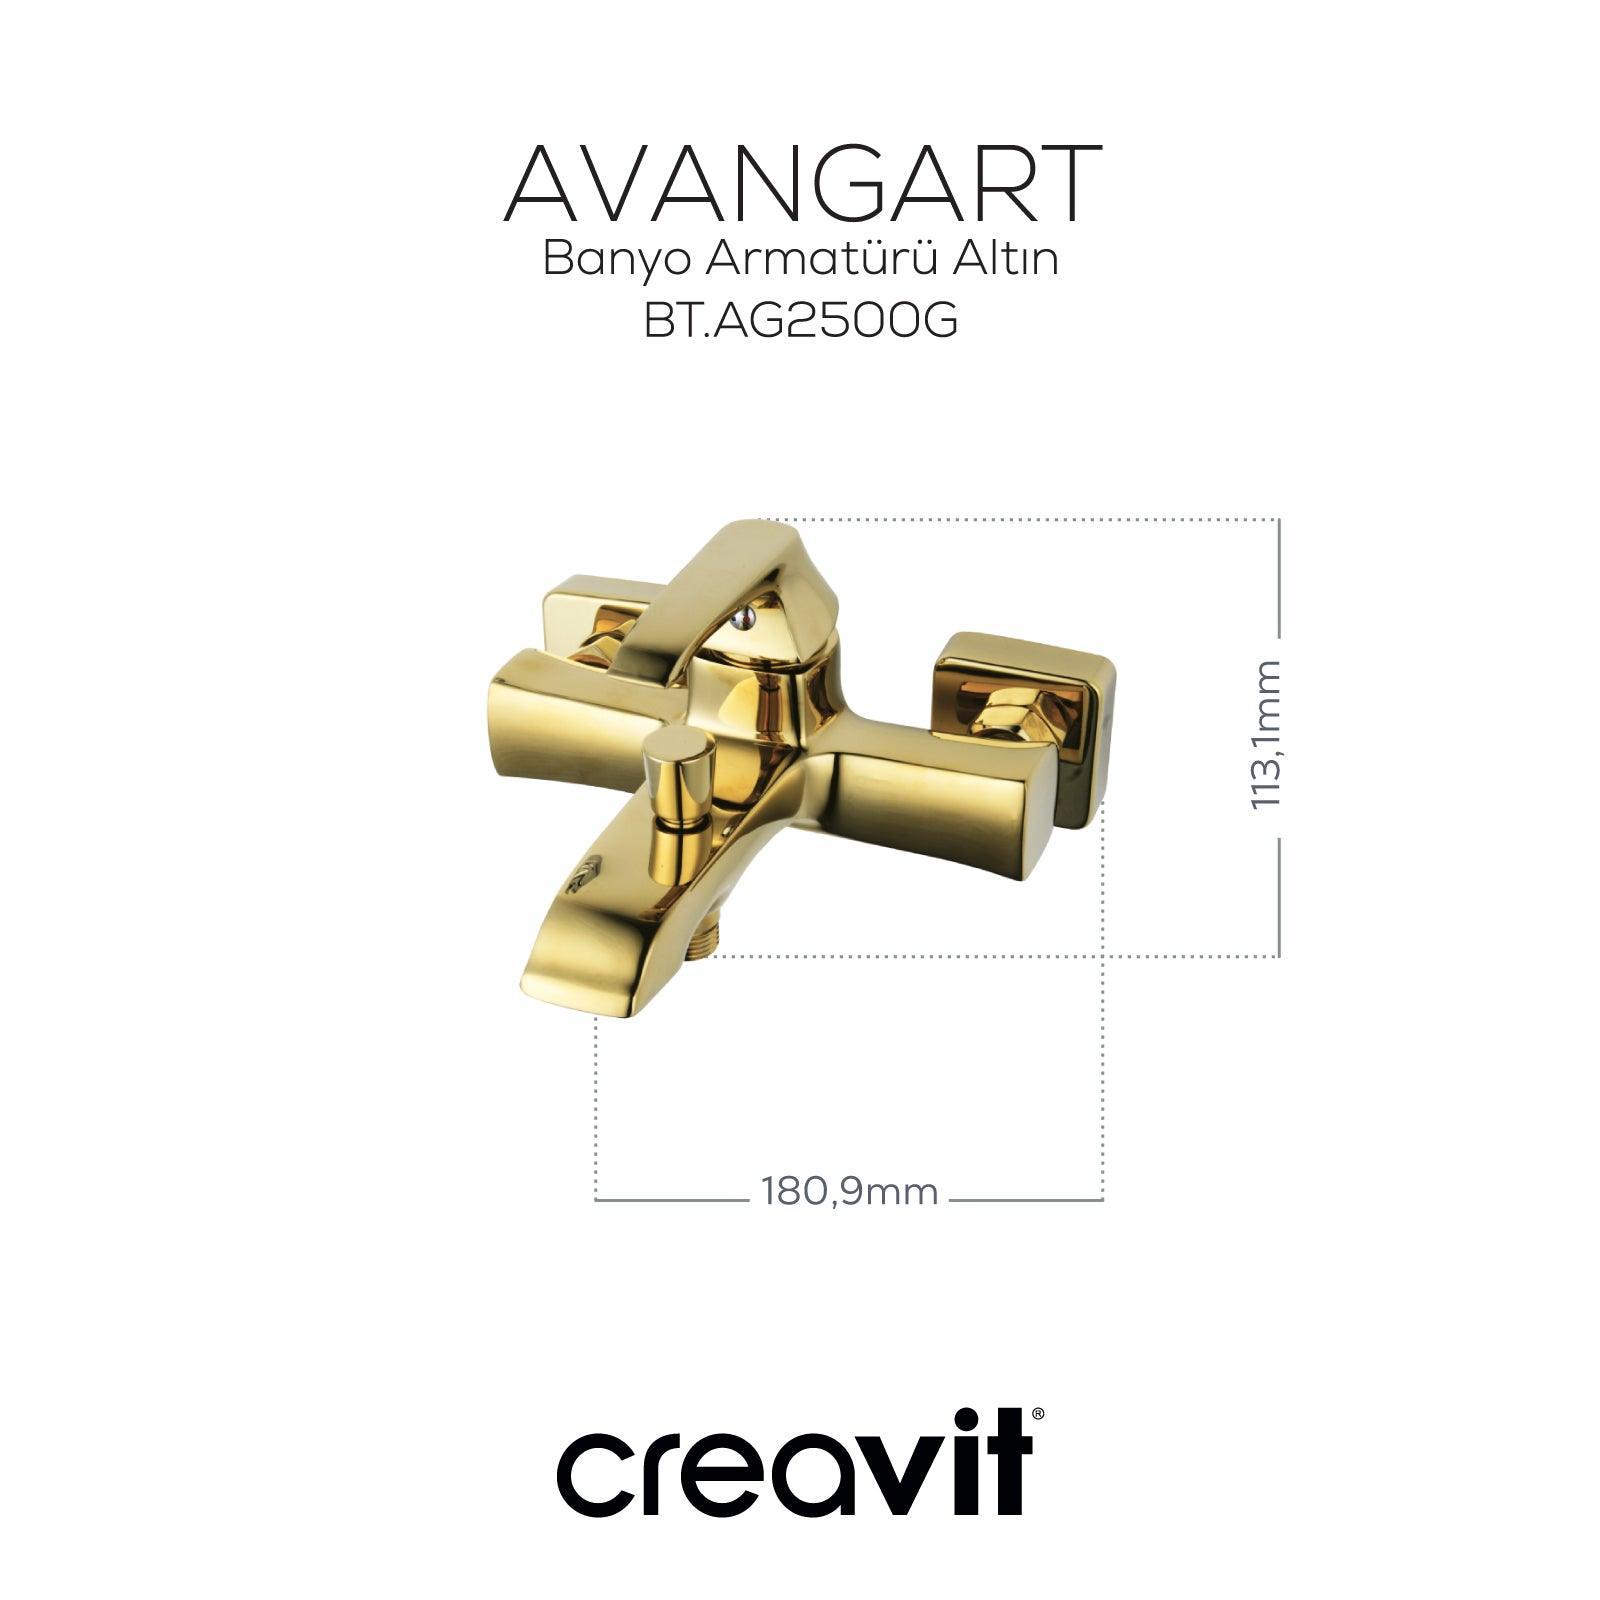 Avangart Banyo Armatürü Altın - Creavit | Banyo Bu Tarafta